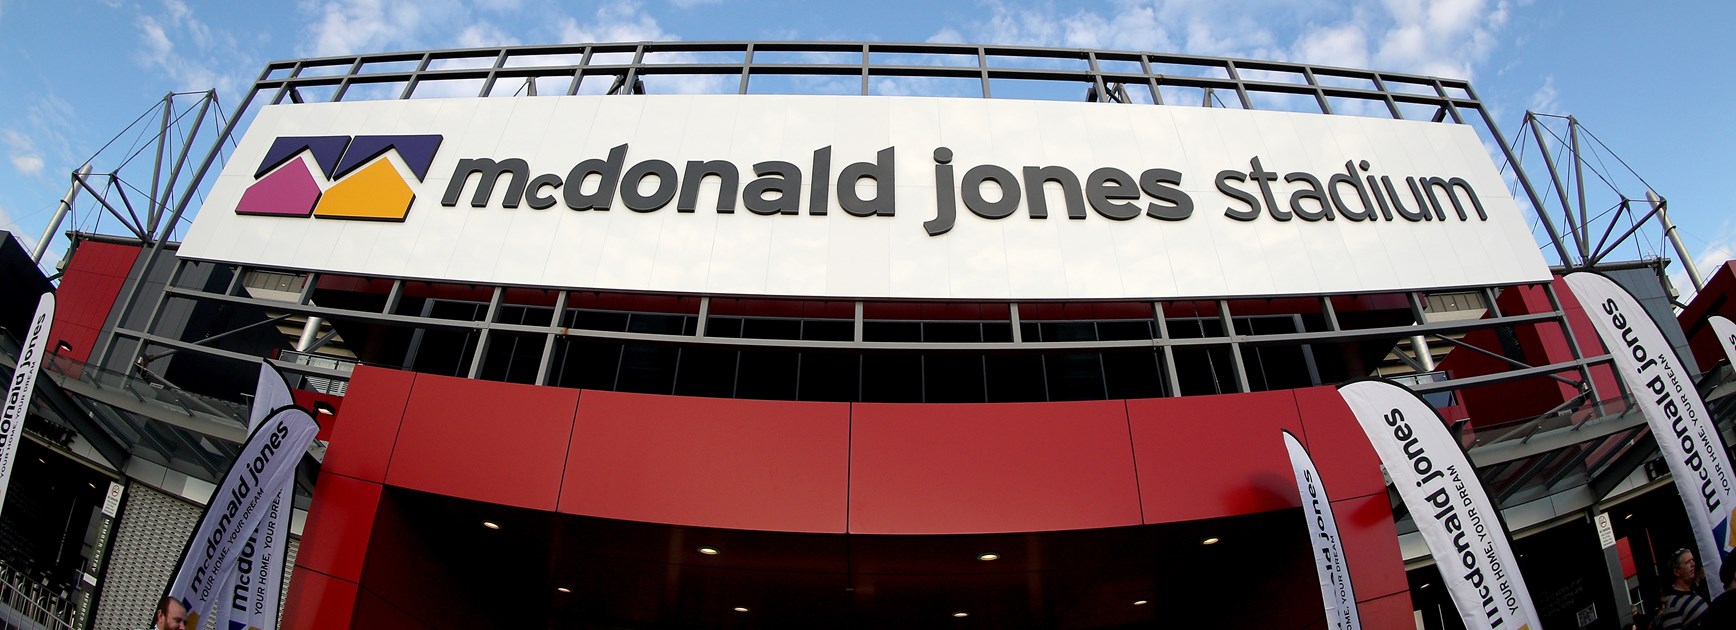 McDonald Jones Homes extend Knights partnership